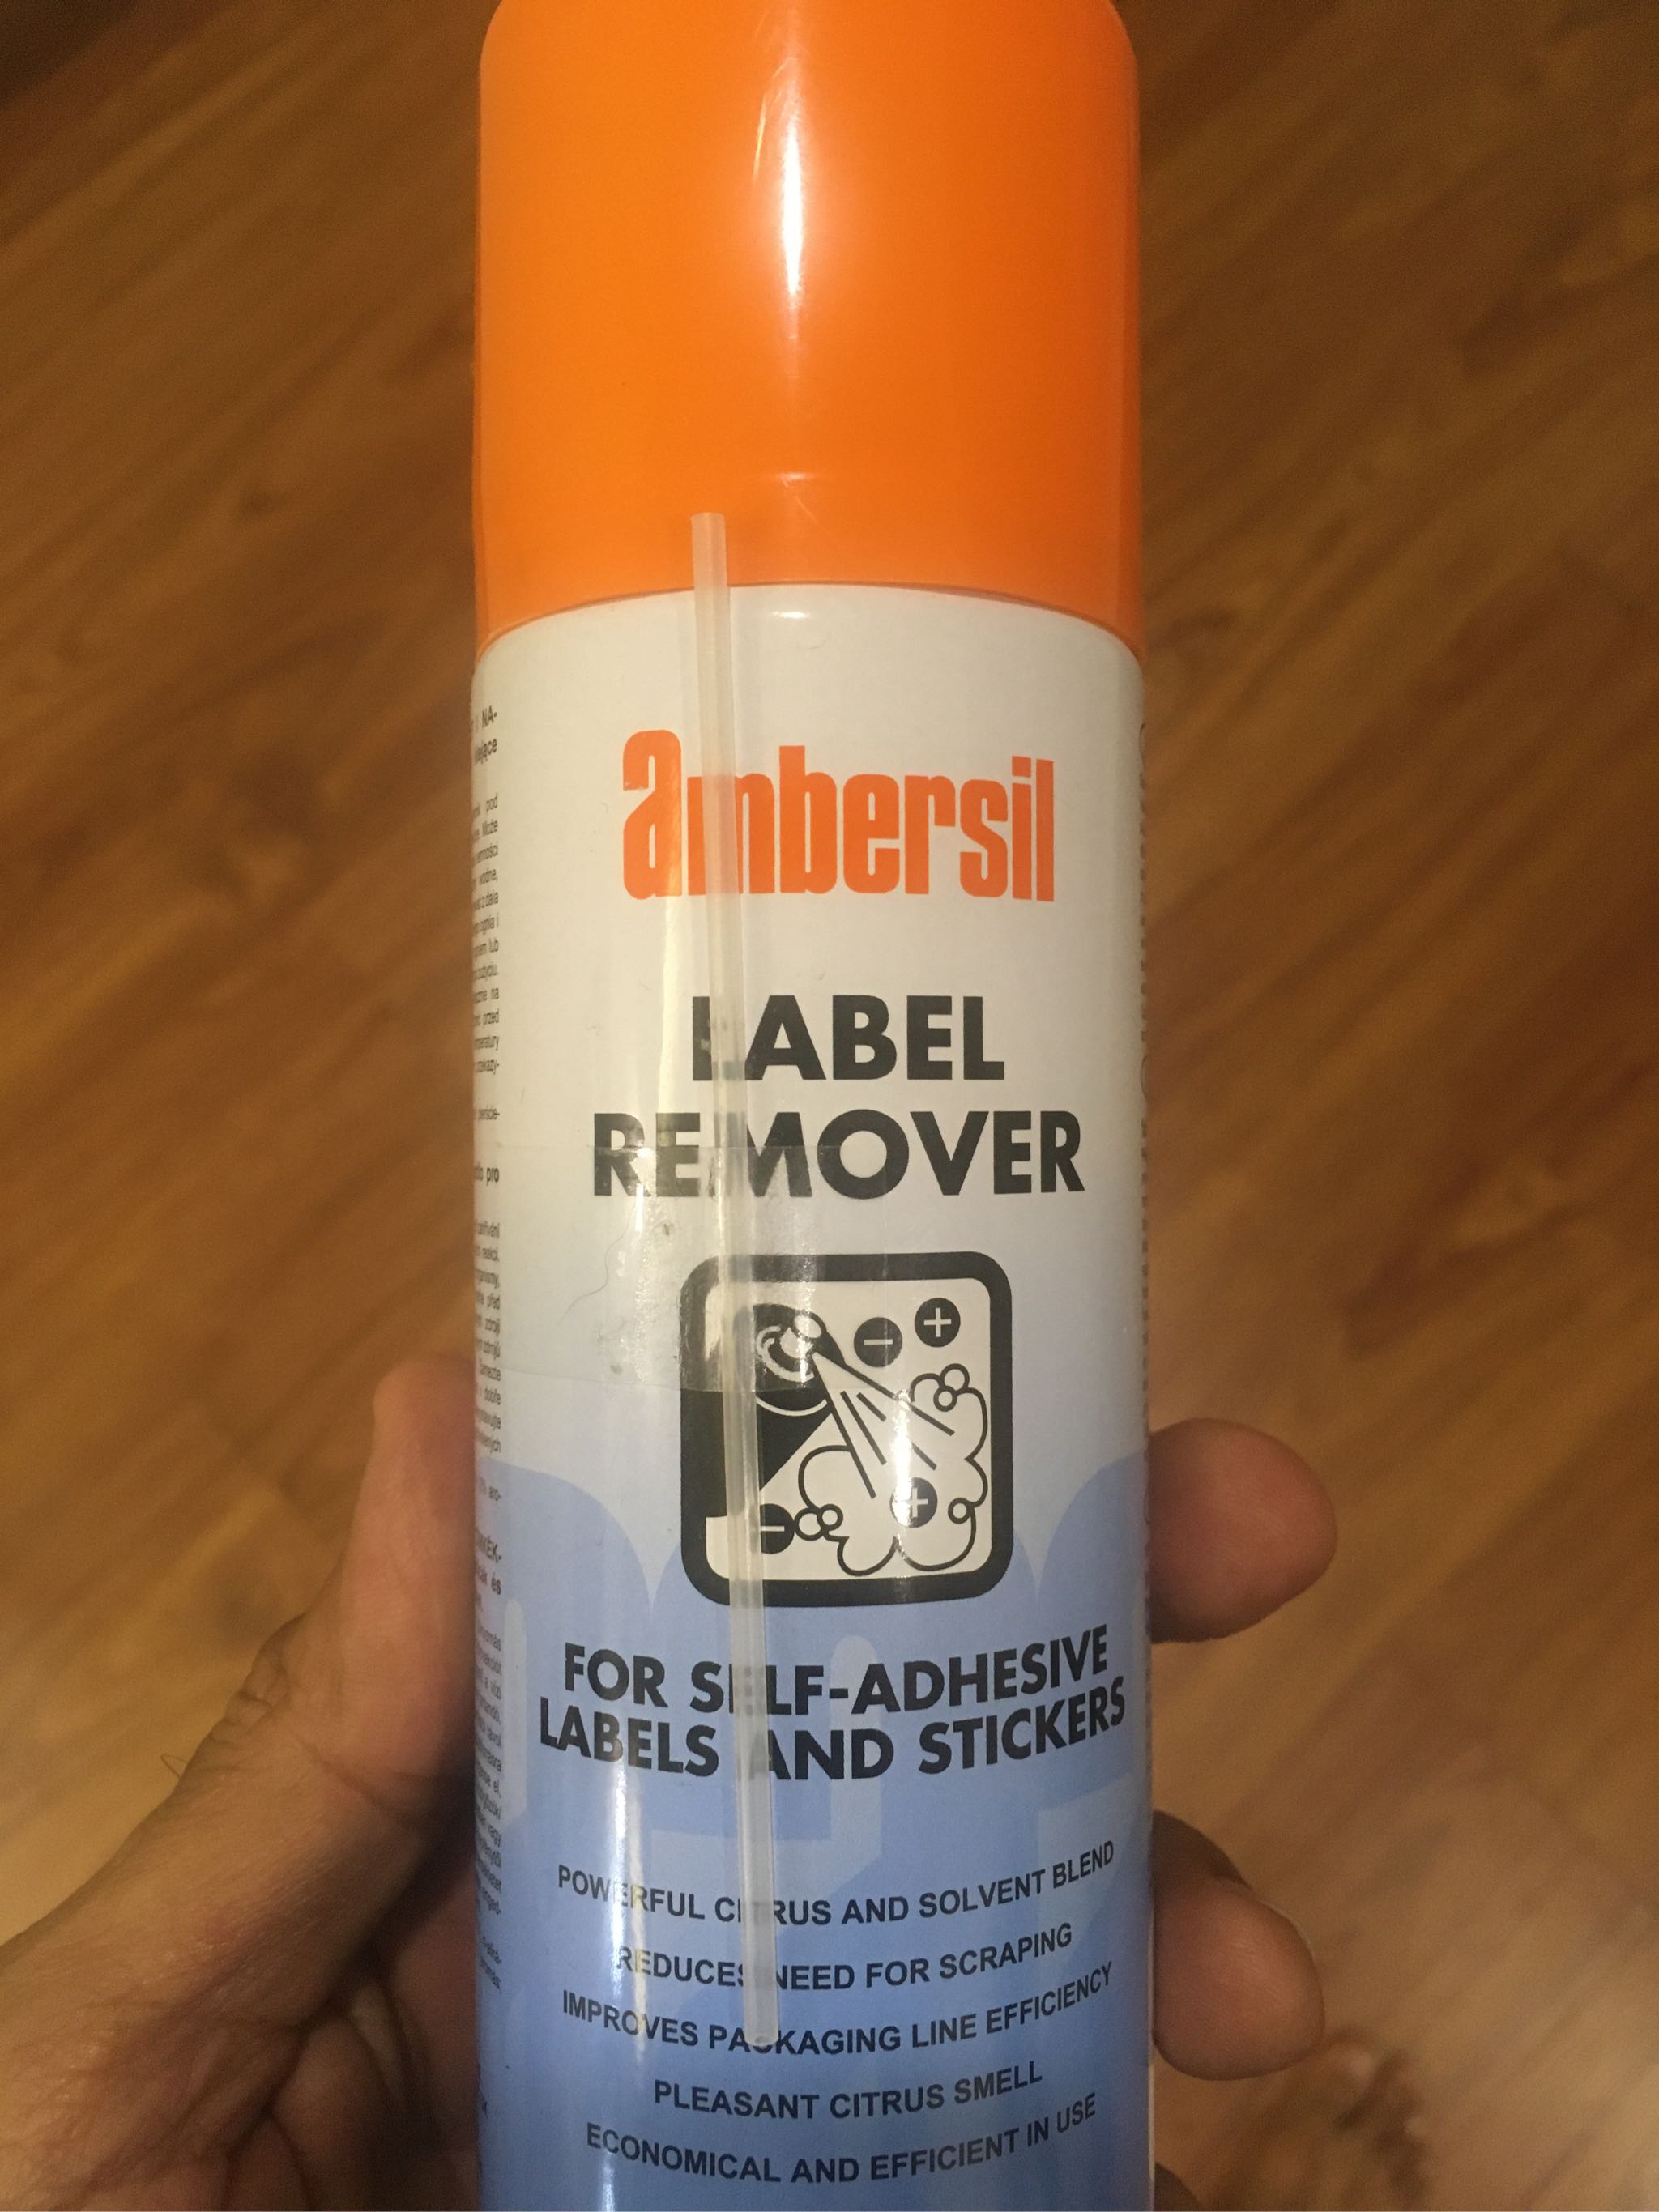 200 ml Aerosol Label Removers, Removes Labels